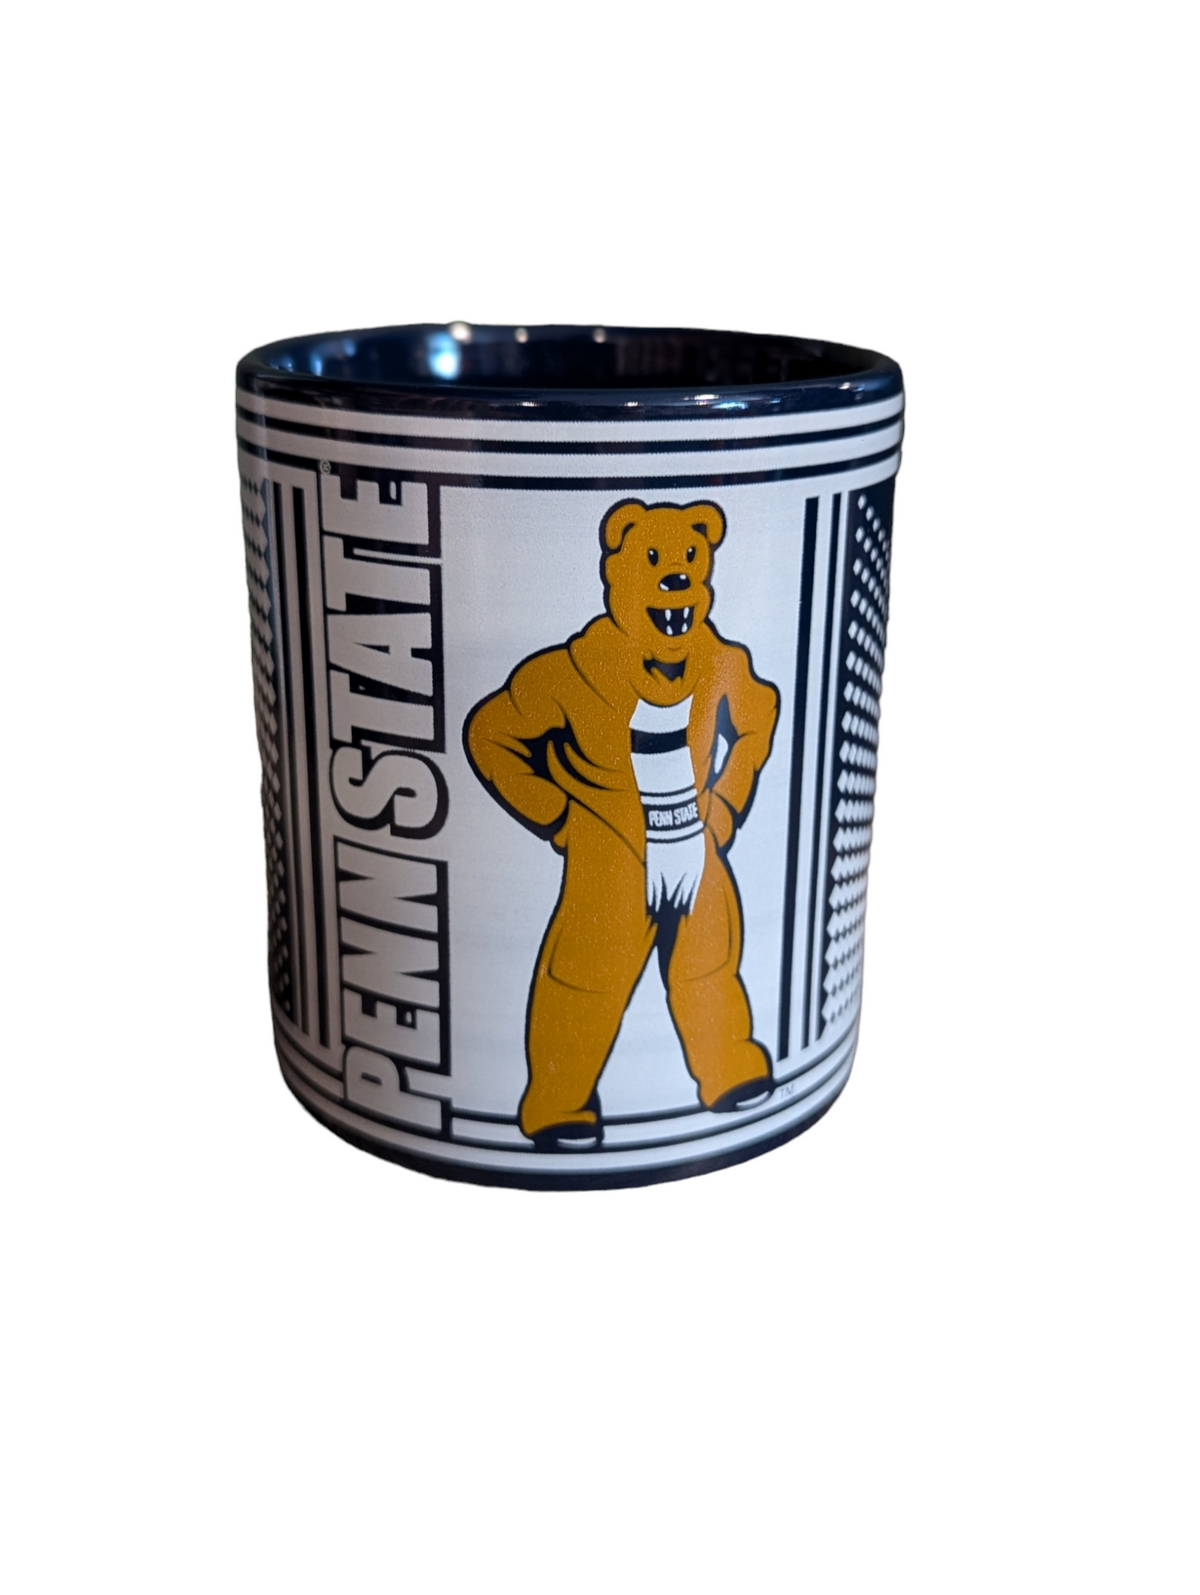 11 oz Penn State Coffee Mug